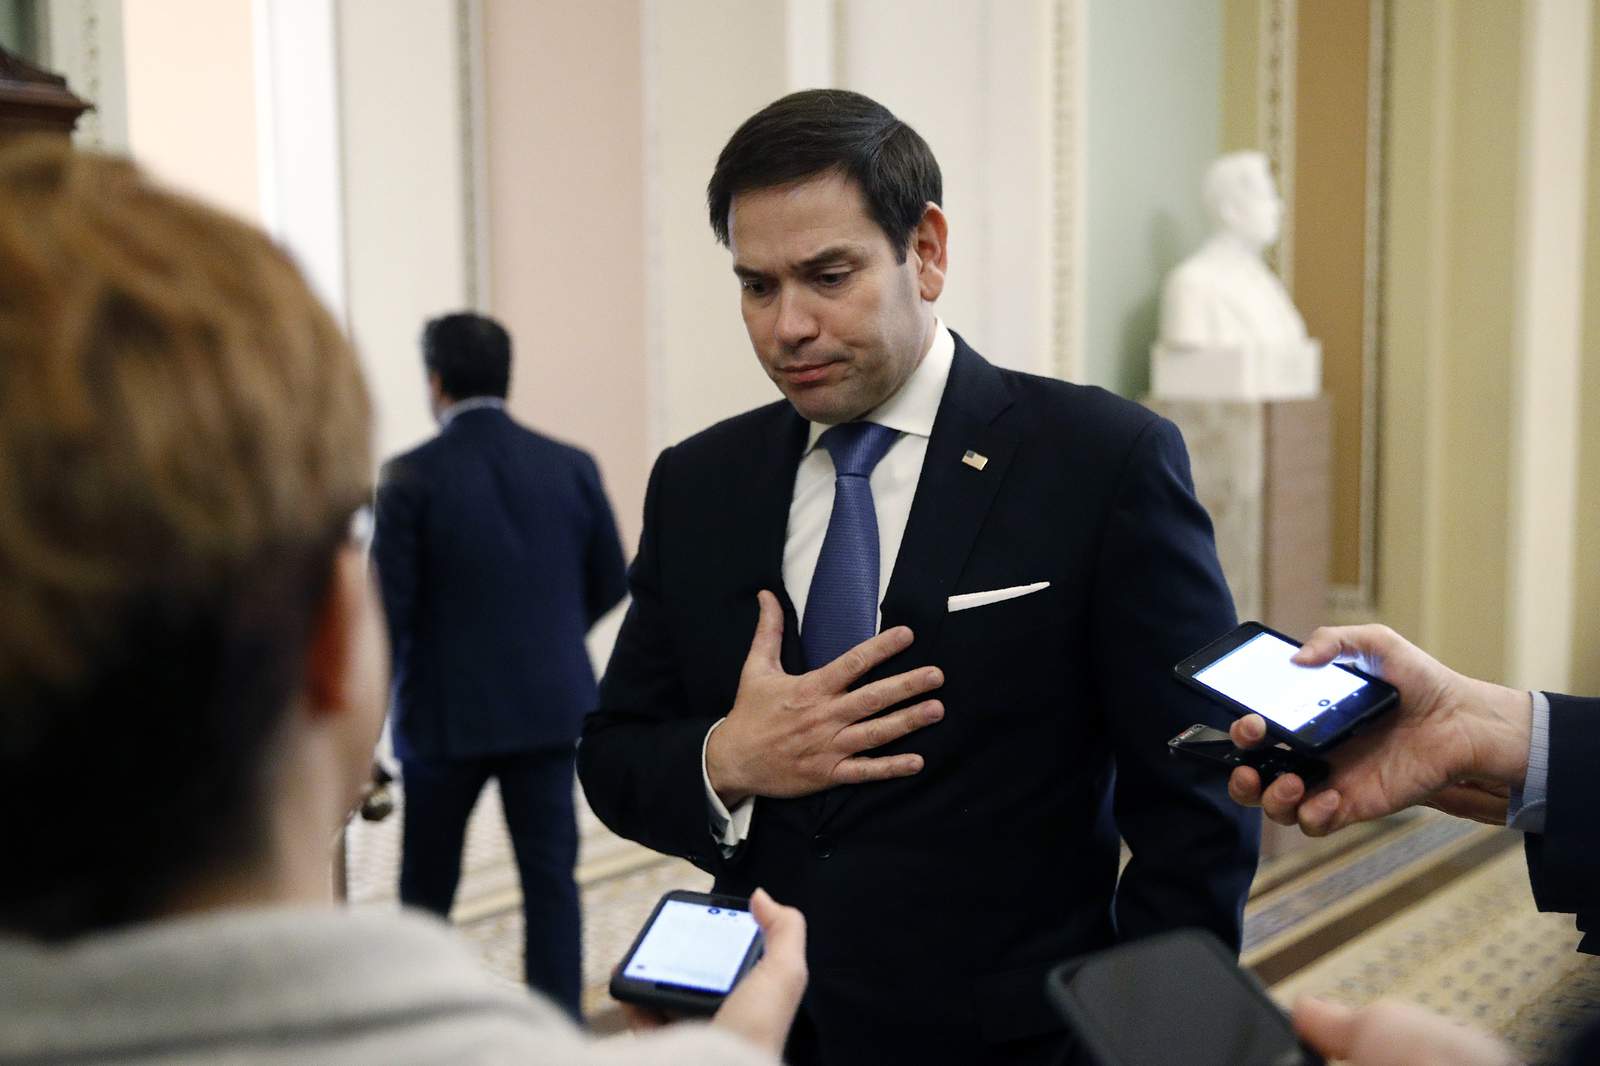 Rubio, now intelligence chair, warns of virus misinformation